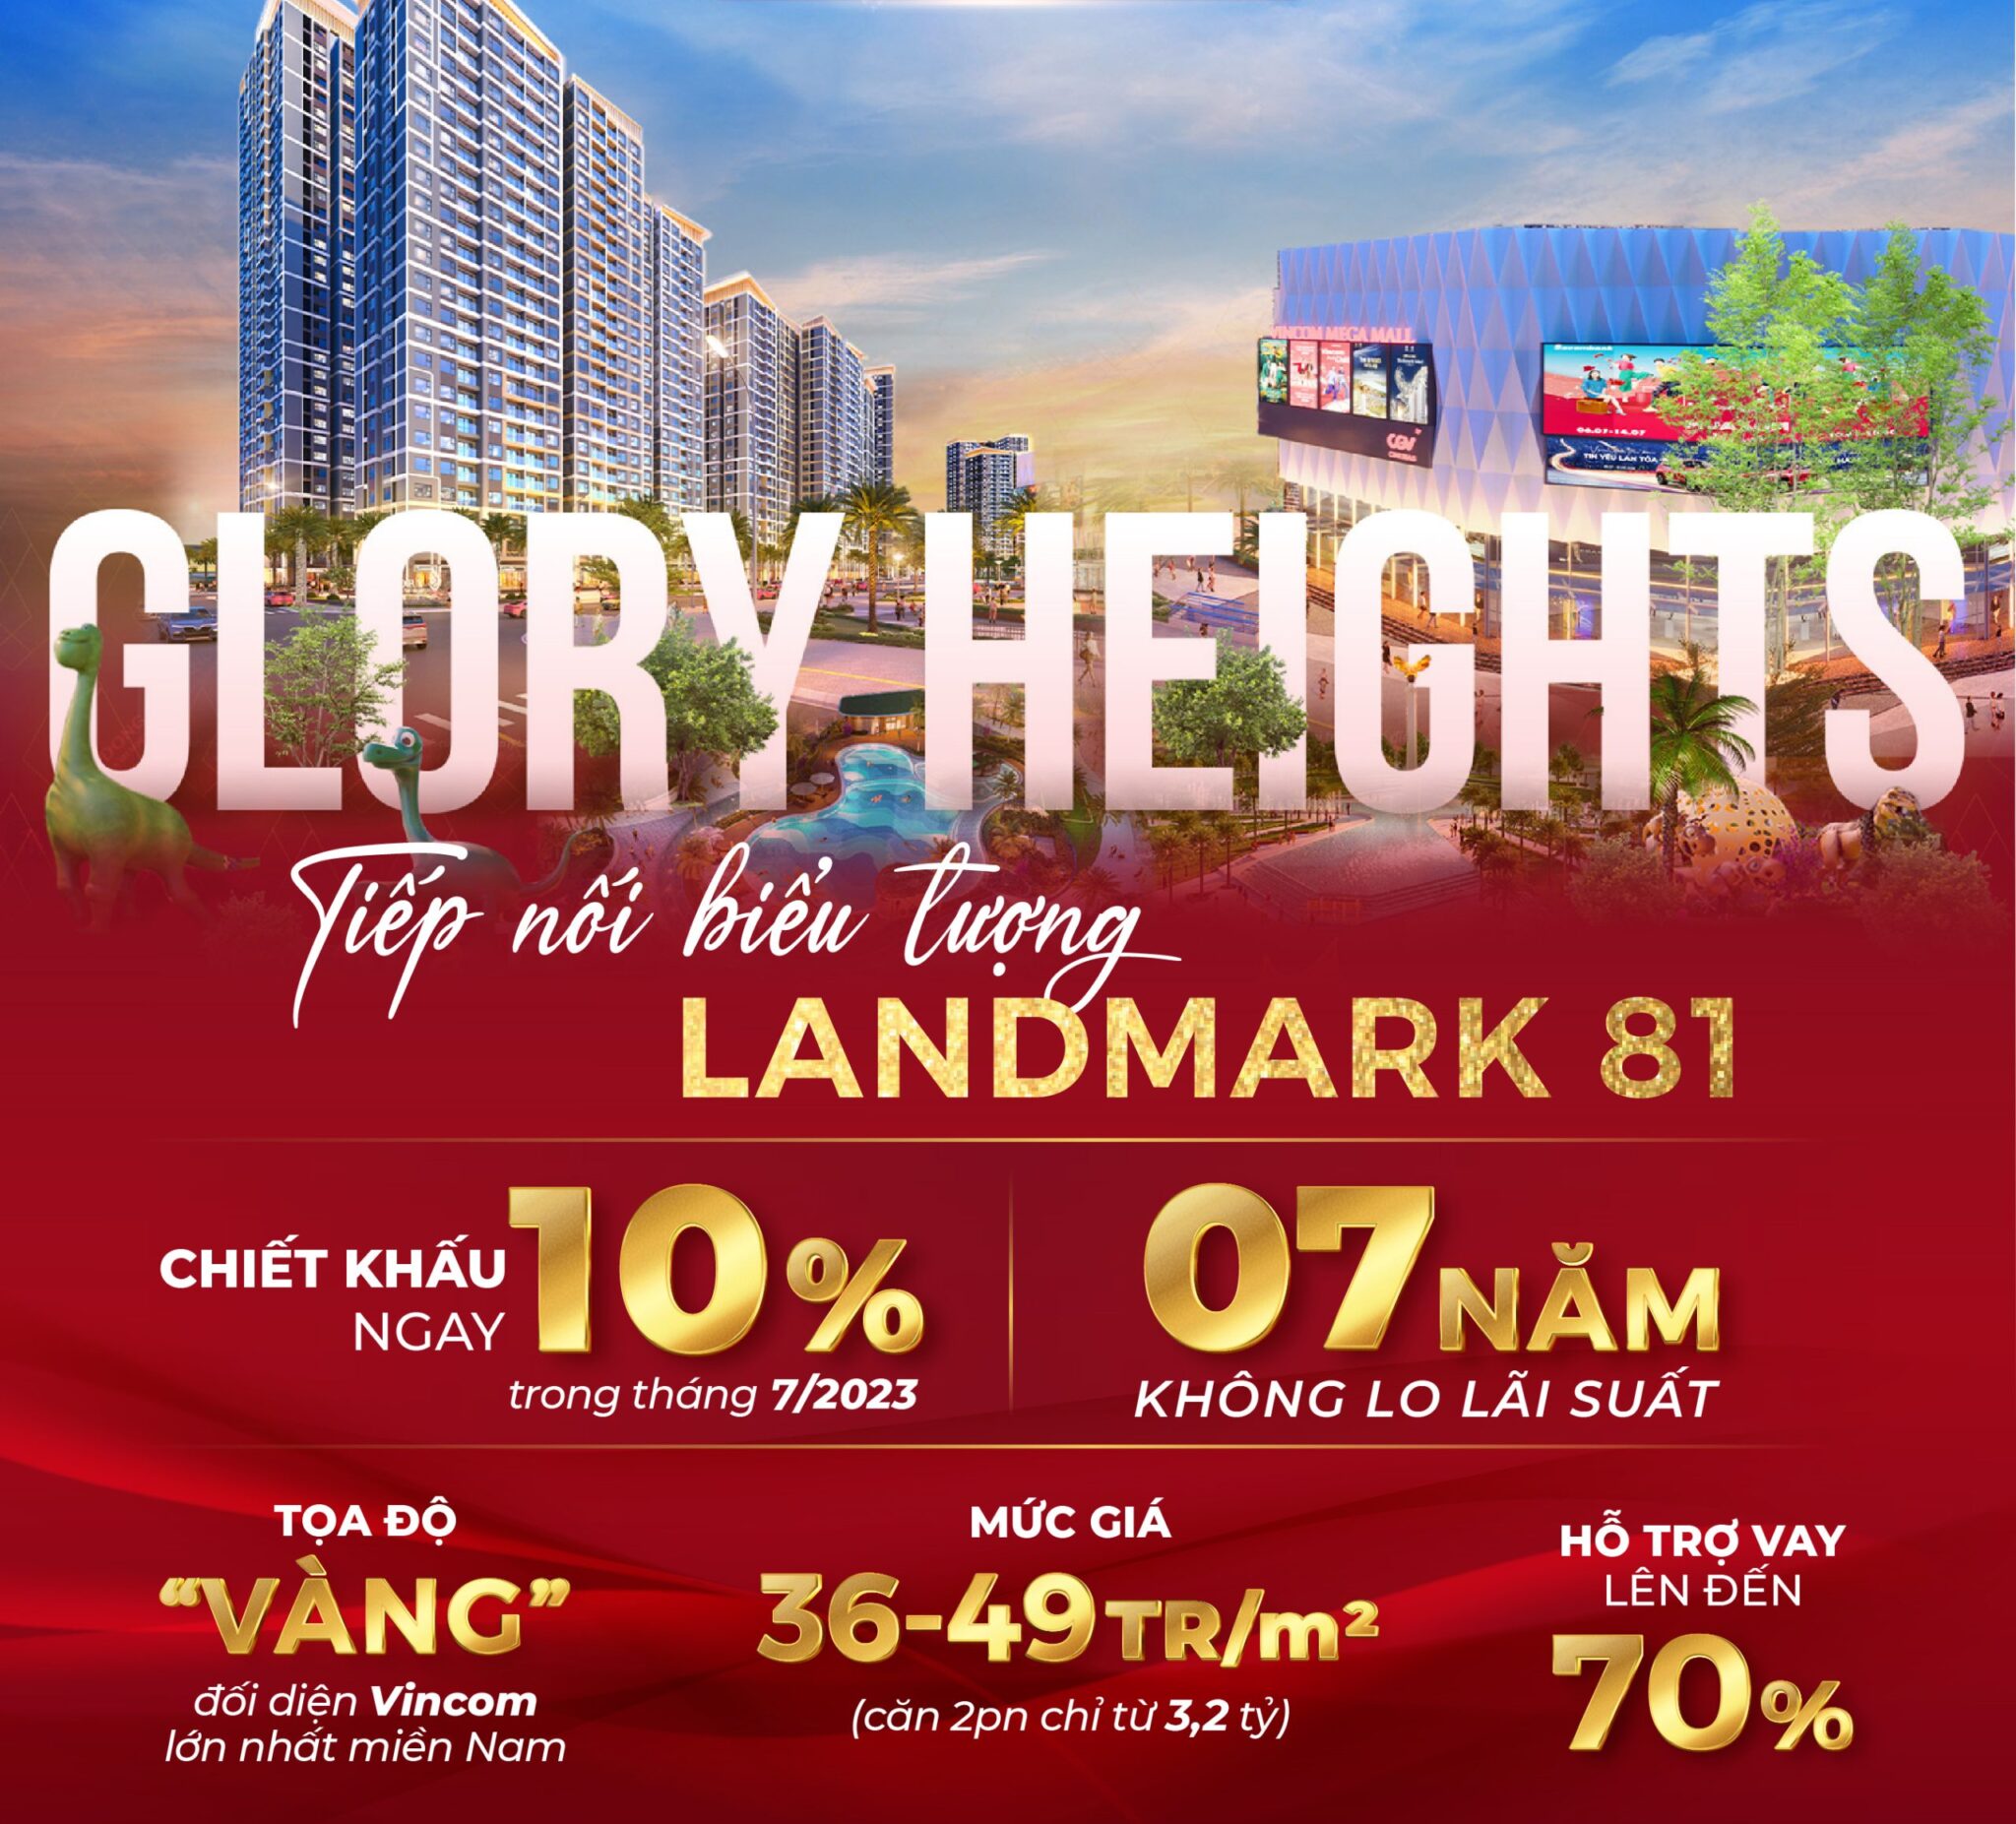 Glory Heights 2 02 1 scaled e1699582218602